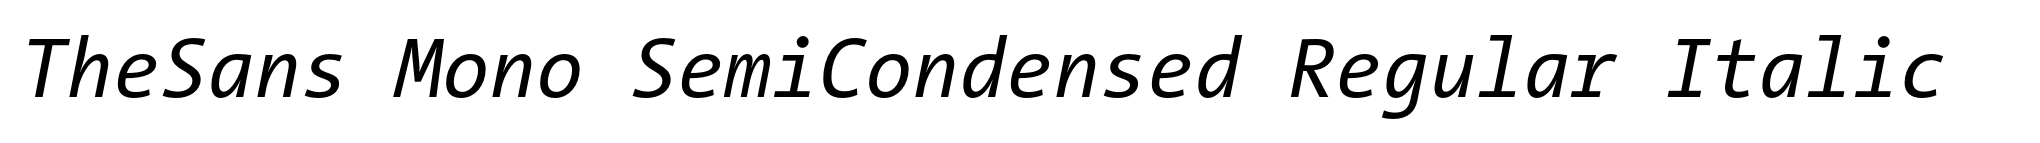 TheSans Mono SemiCondensed Regular Italic image